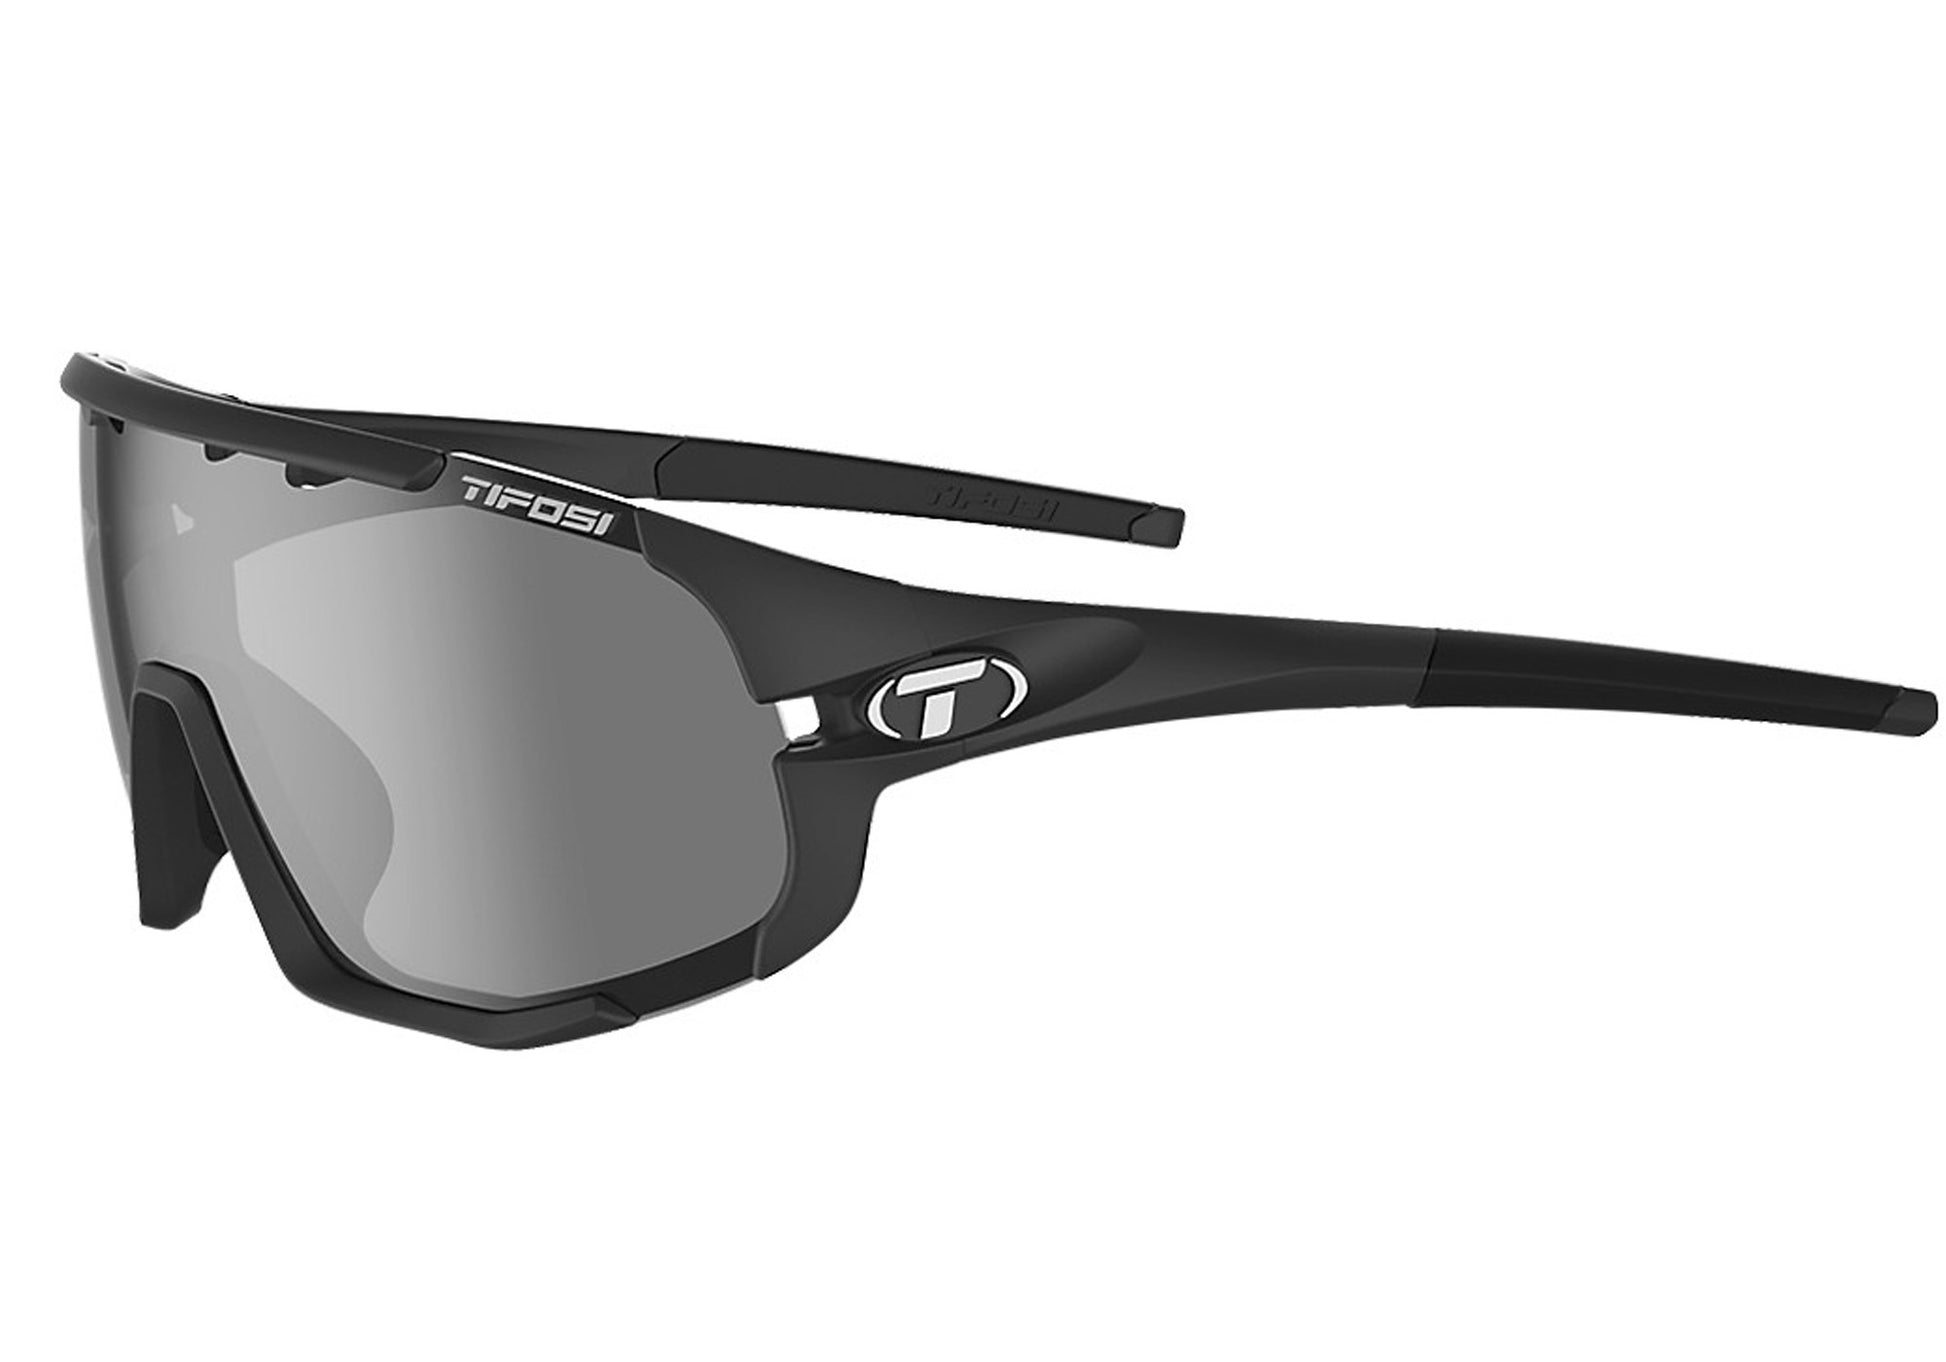 Tifosi Sledge Matte Black Sunglasses With 3 Interchangeable Lenses Woolys Wheels Sydney